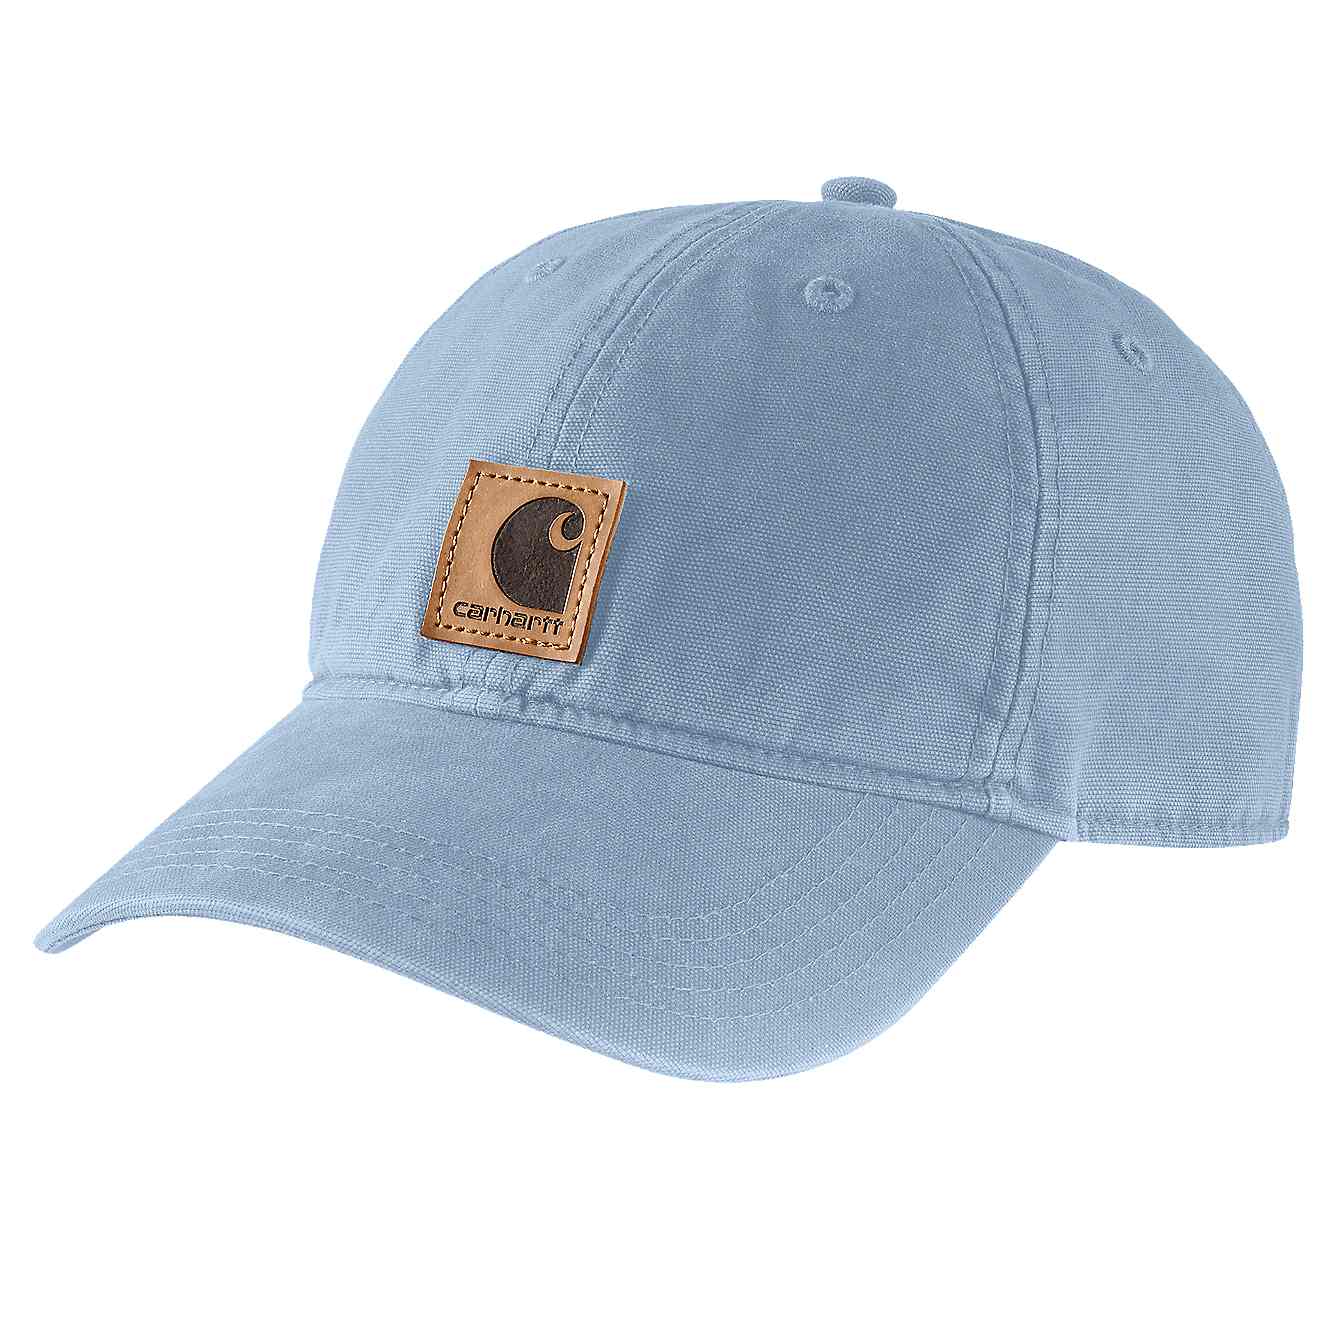 Carhartt arbeitskleidung-store Cap Baseball Cap – 100289 Odessa